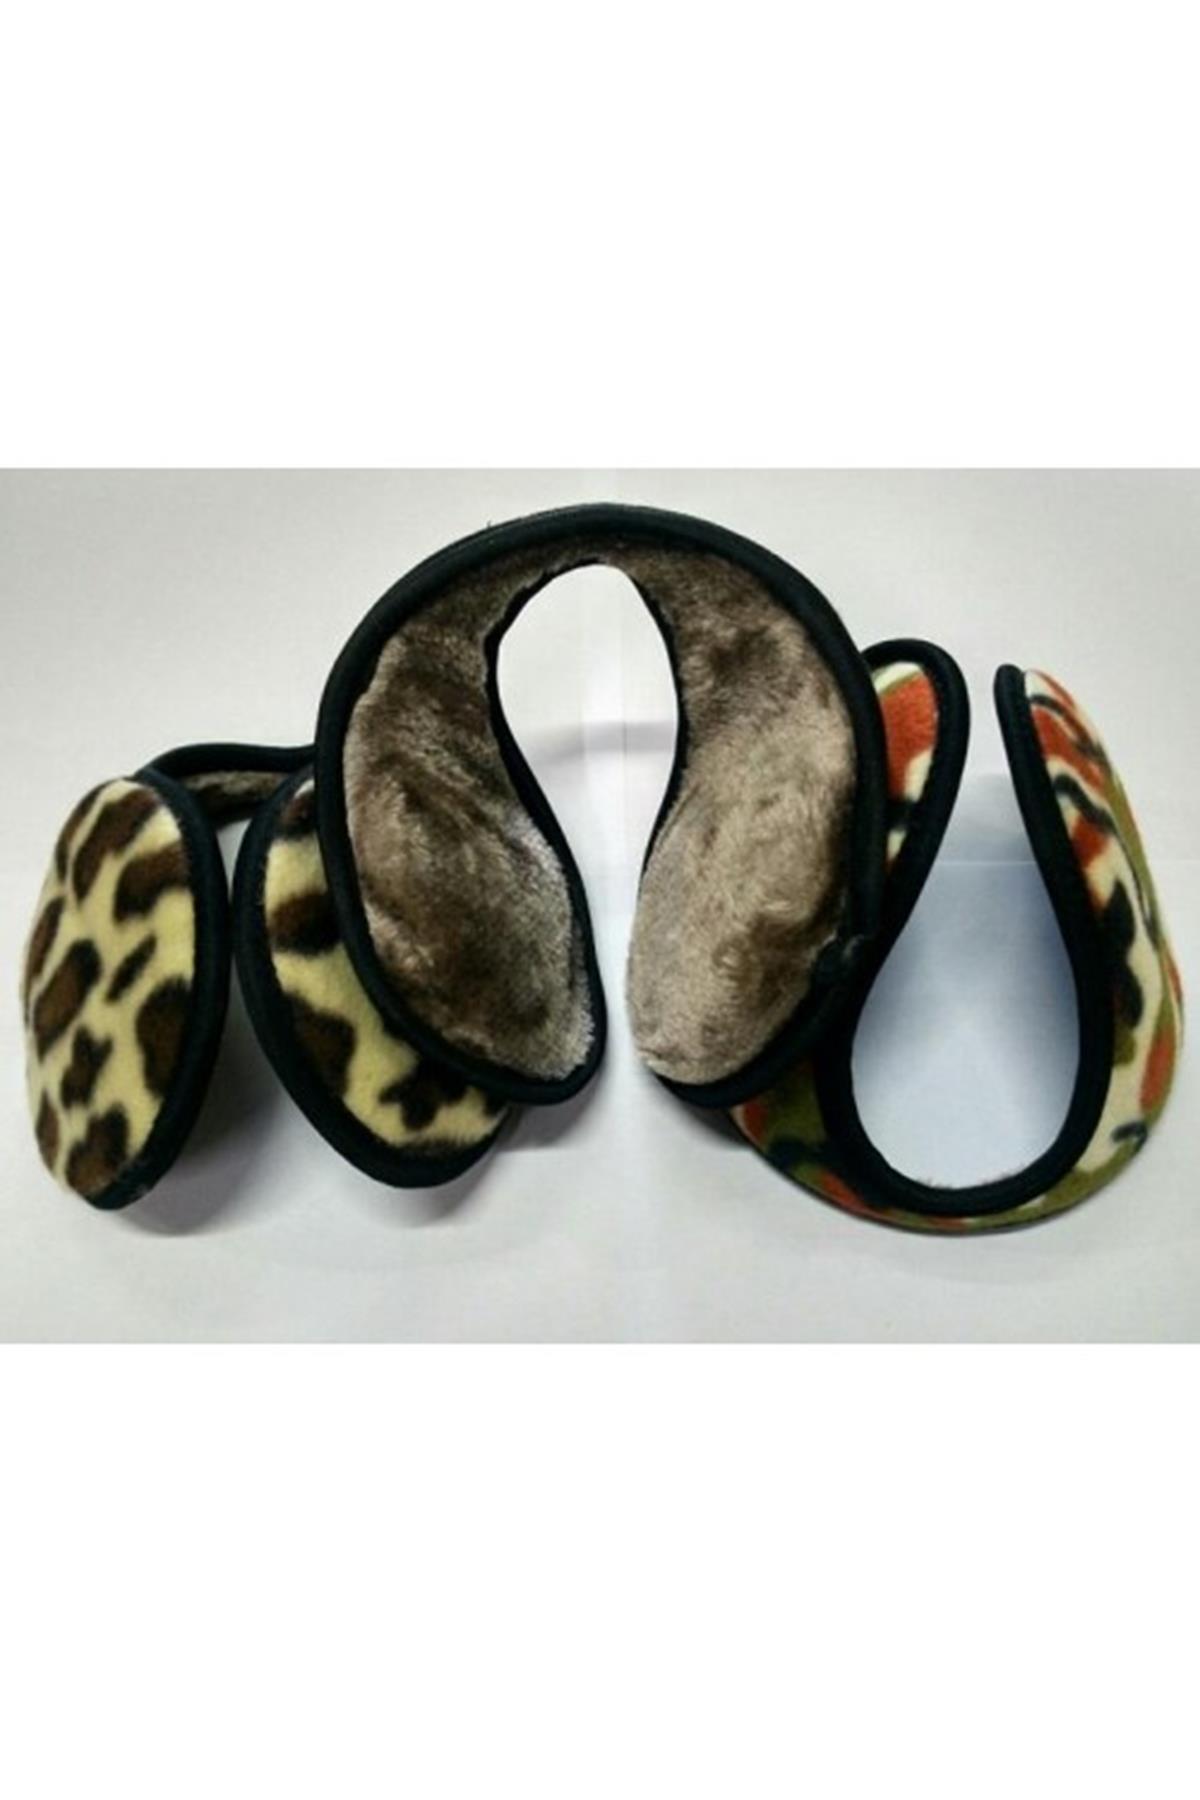 Ense Type Winter Fleece Headset-Camouflage Patroon